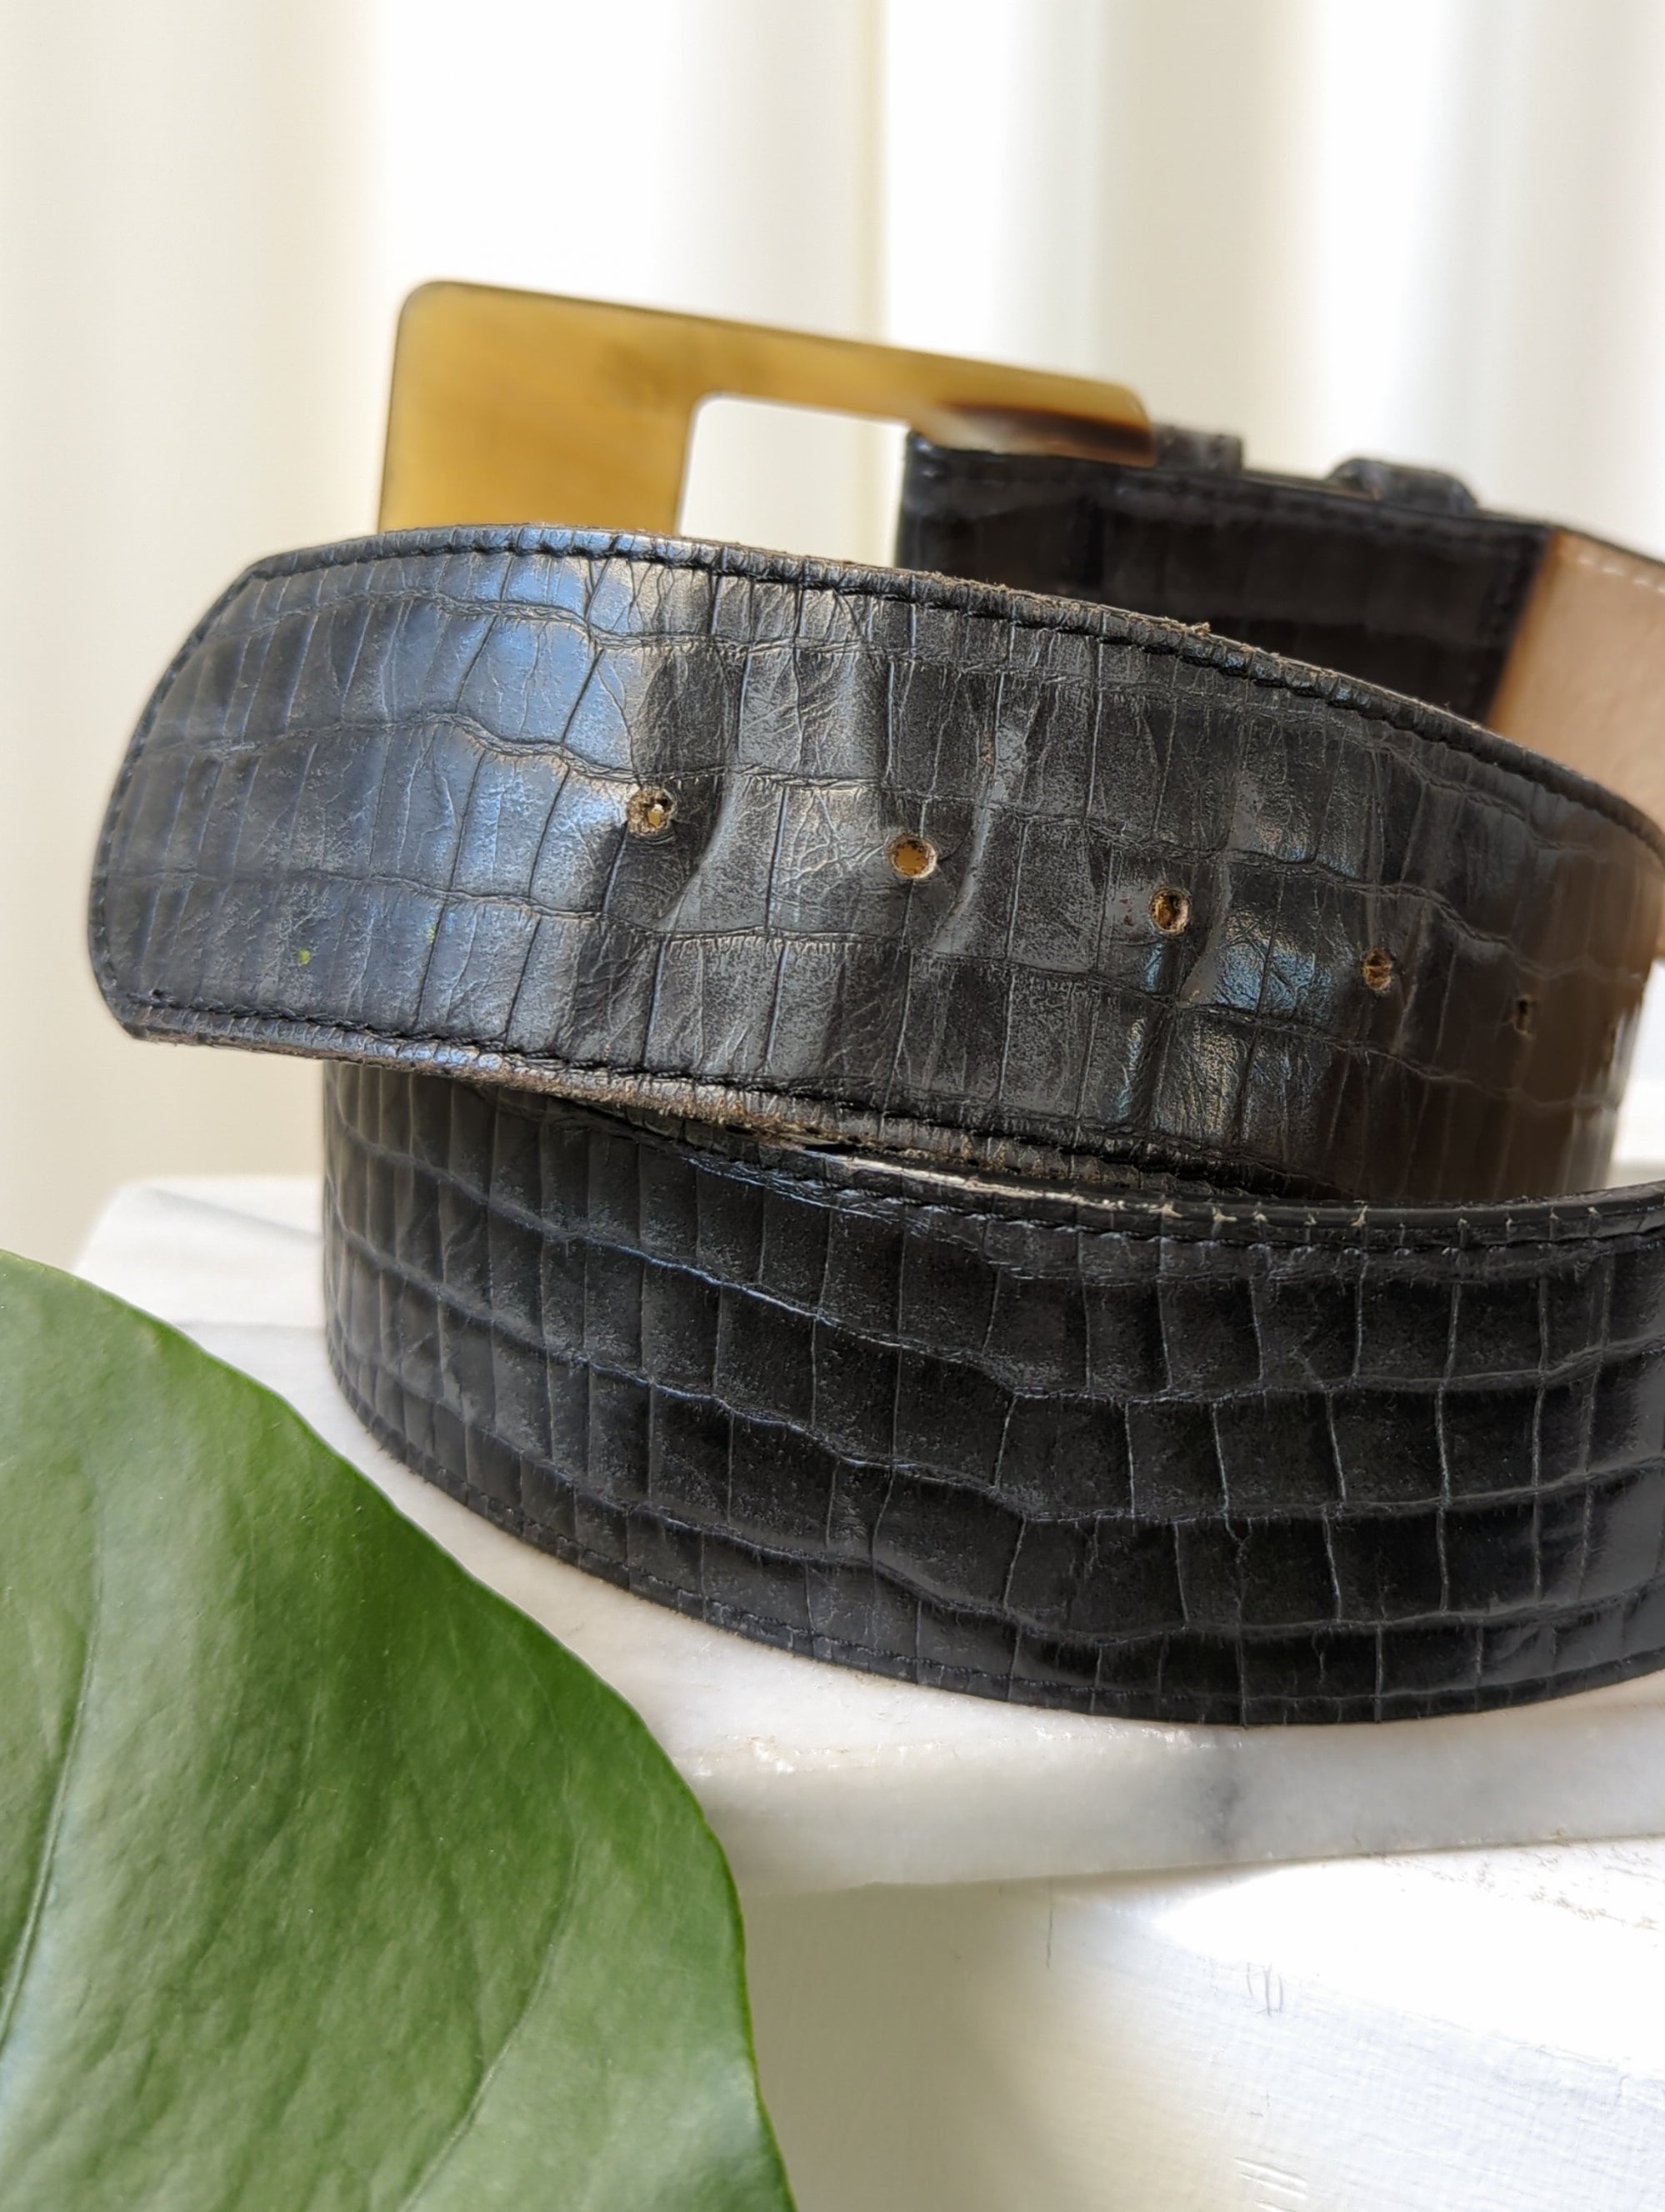 female buckle belt in crocodile-embossed leather